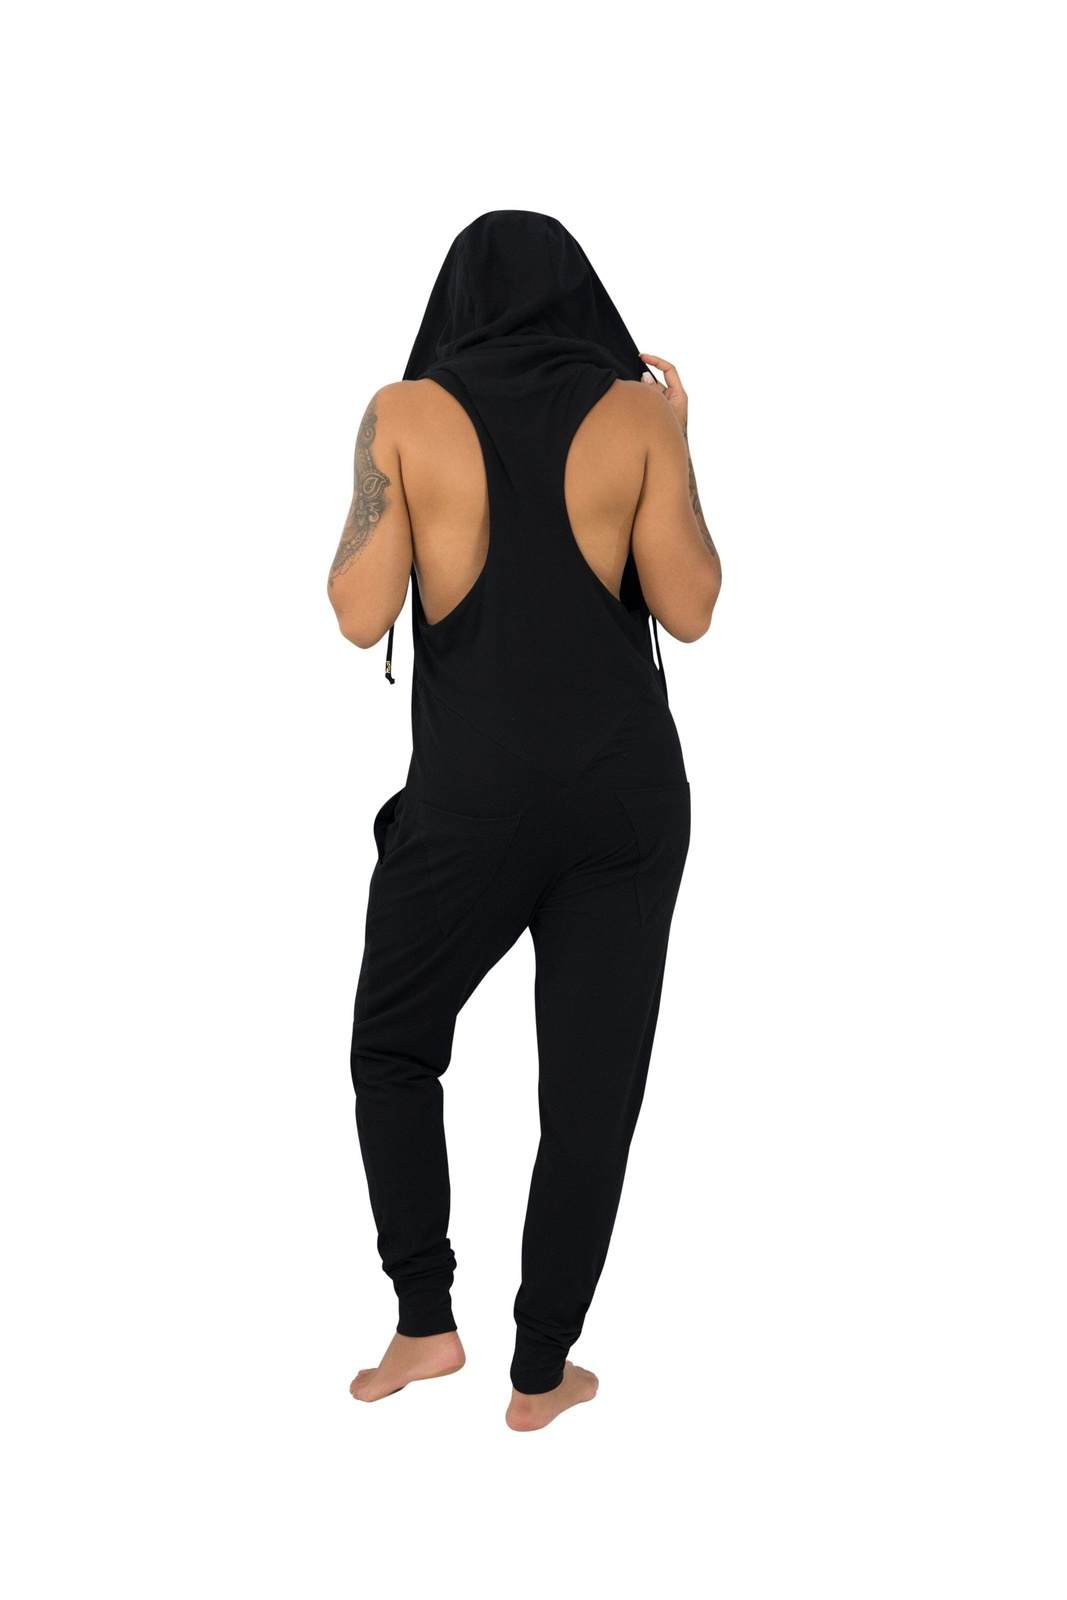 Black Racerback Jumpsuit by Ekoluxe sustainable fashion brand.